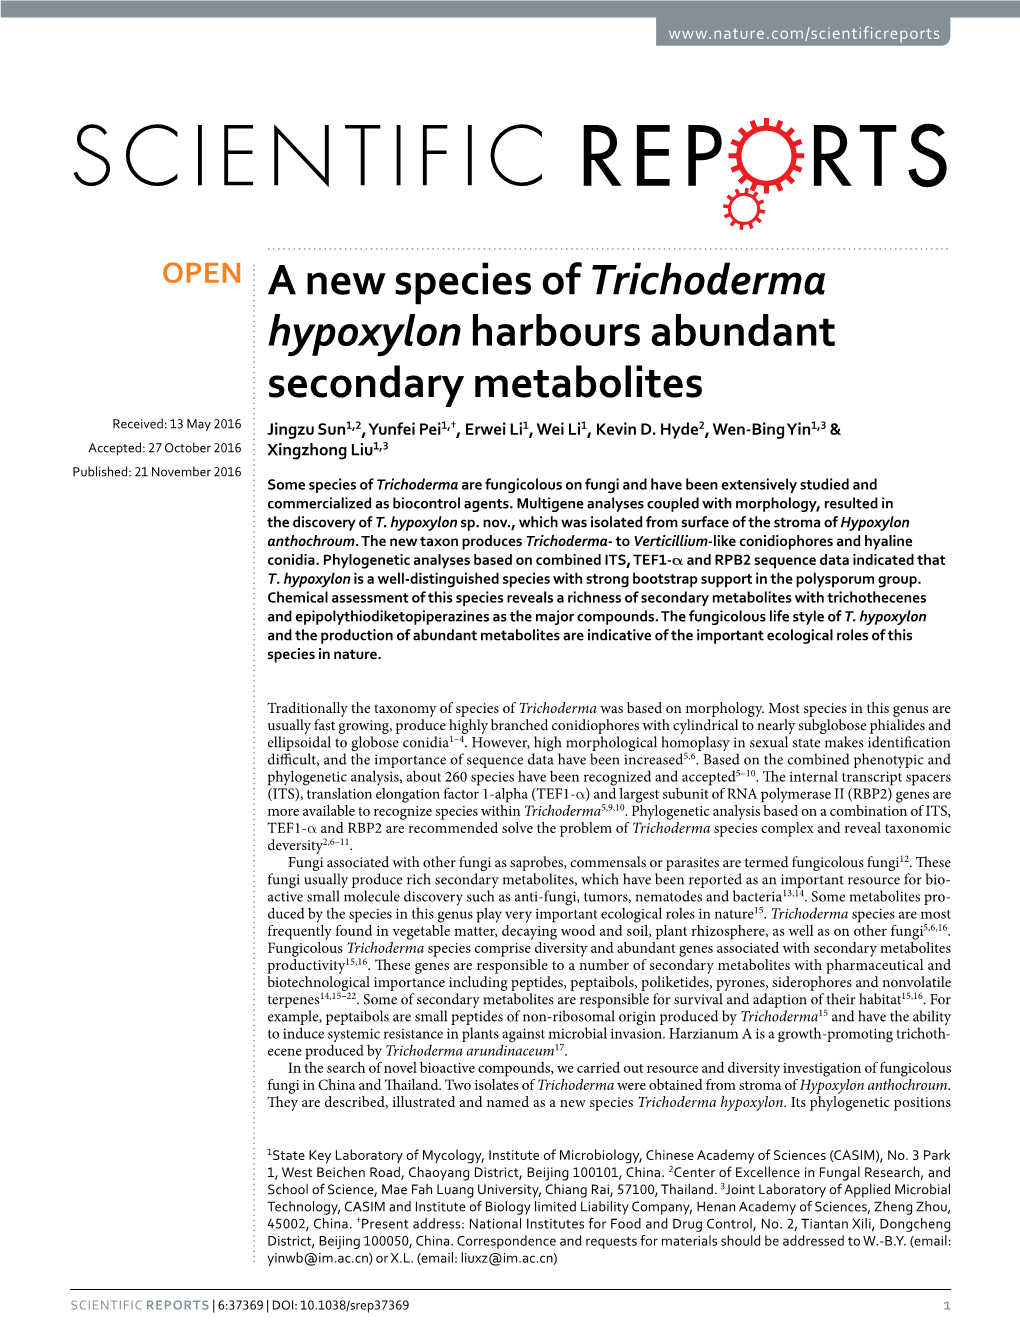 A New Species of Trichoderma Hypoxylon Harbours Abundant Secondary Metabolites Received: 13 May 2016 Jingzu Sun1,2, Yunfei Pei1,†, Erwei Li1, Wei Li1, Kevin D